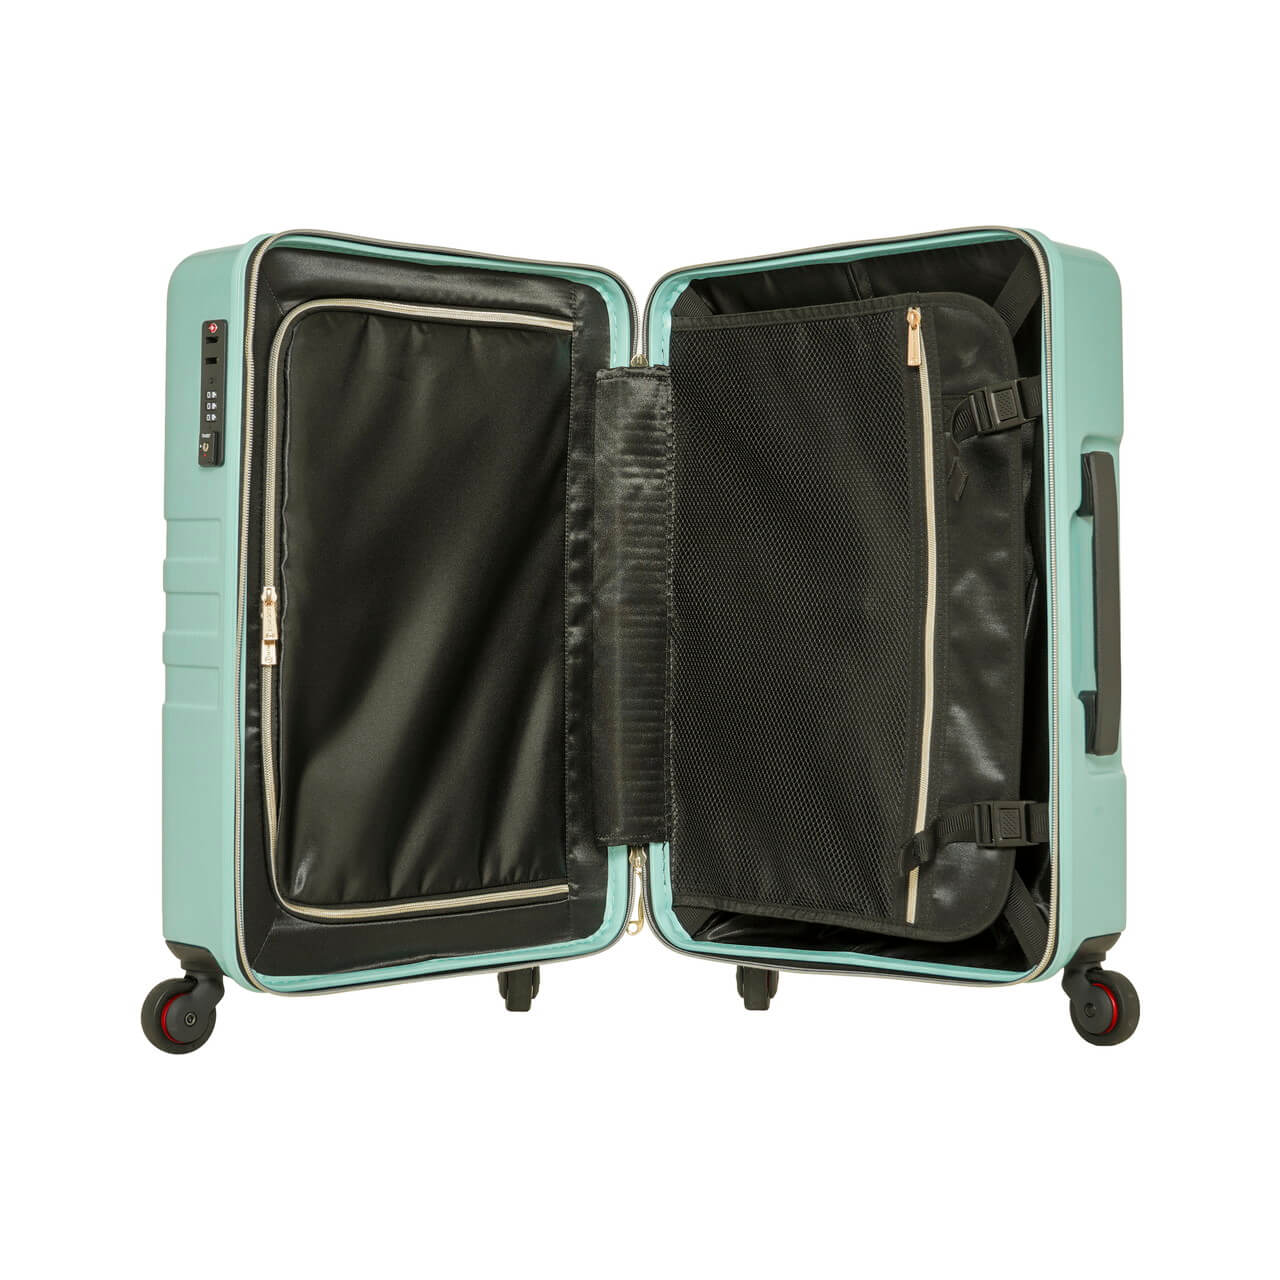 SKYNAVIGATORのスーツケースSK-0843-48の内装